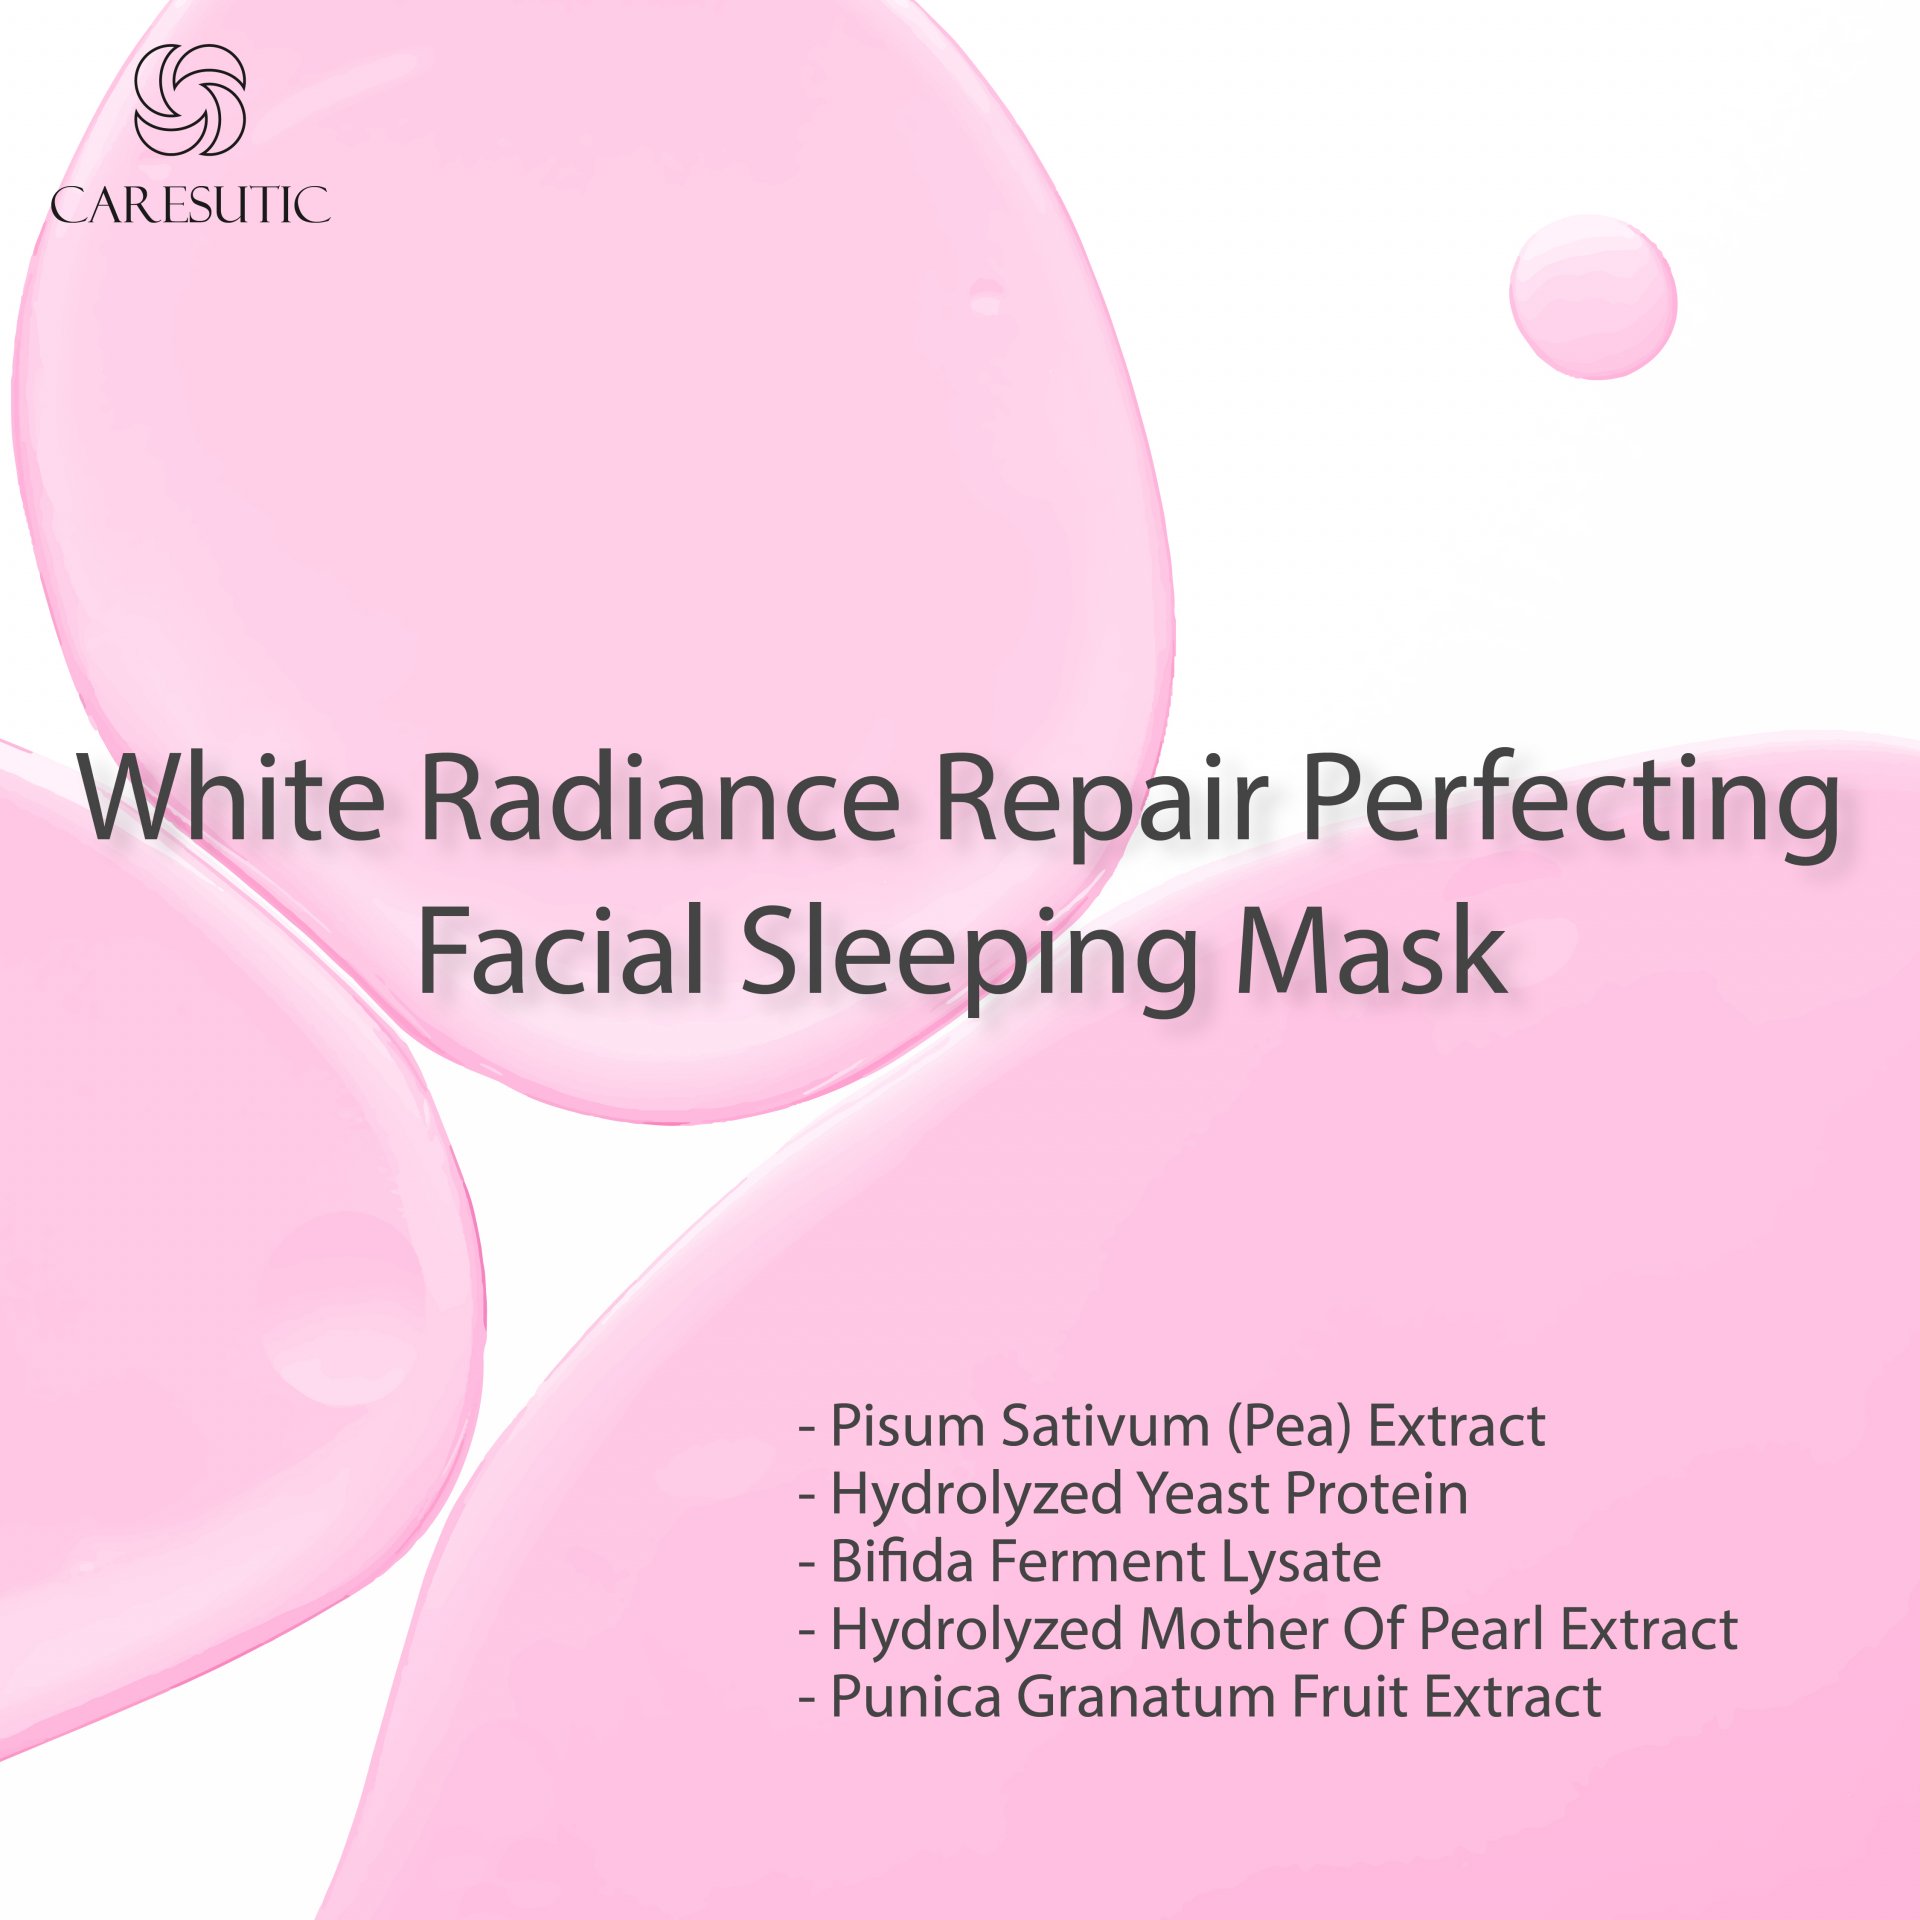 White Radiance Repair Perfecting Facial Sleeping Mask